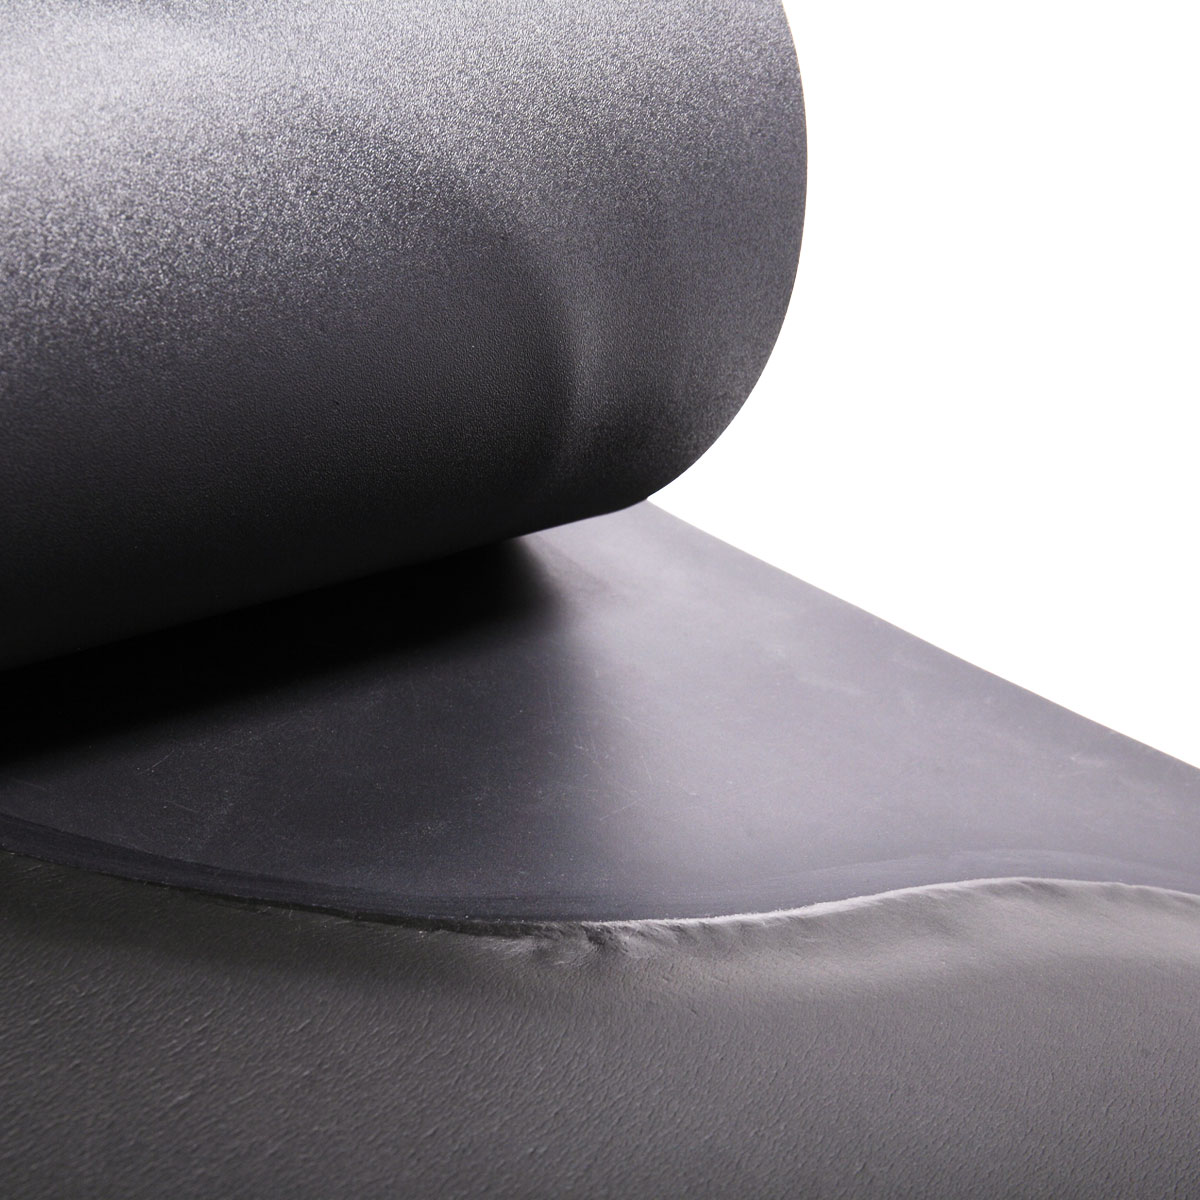 Veryke Salon Mat, Black Chair Semi-Circular Floor Mat, Barber Salon Anti Fatigue Mat for Barber Shop Chair - image 3 of 6